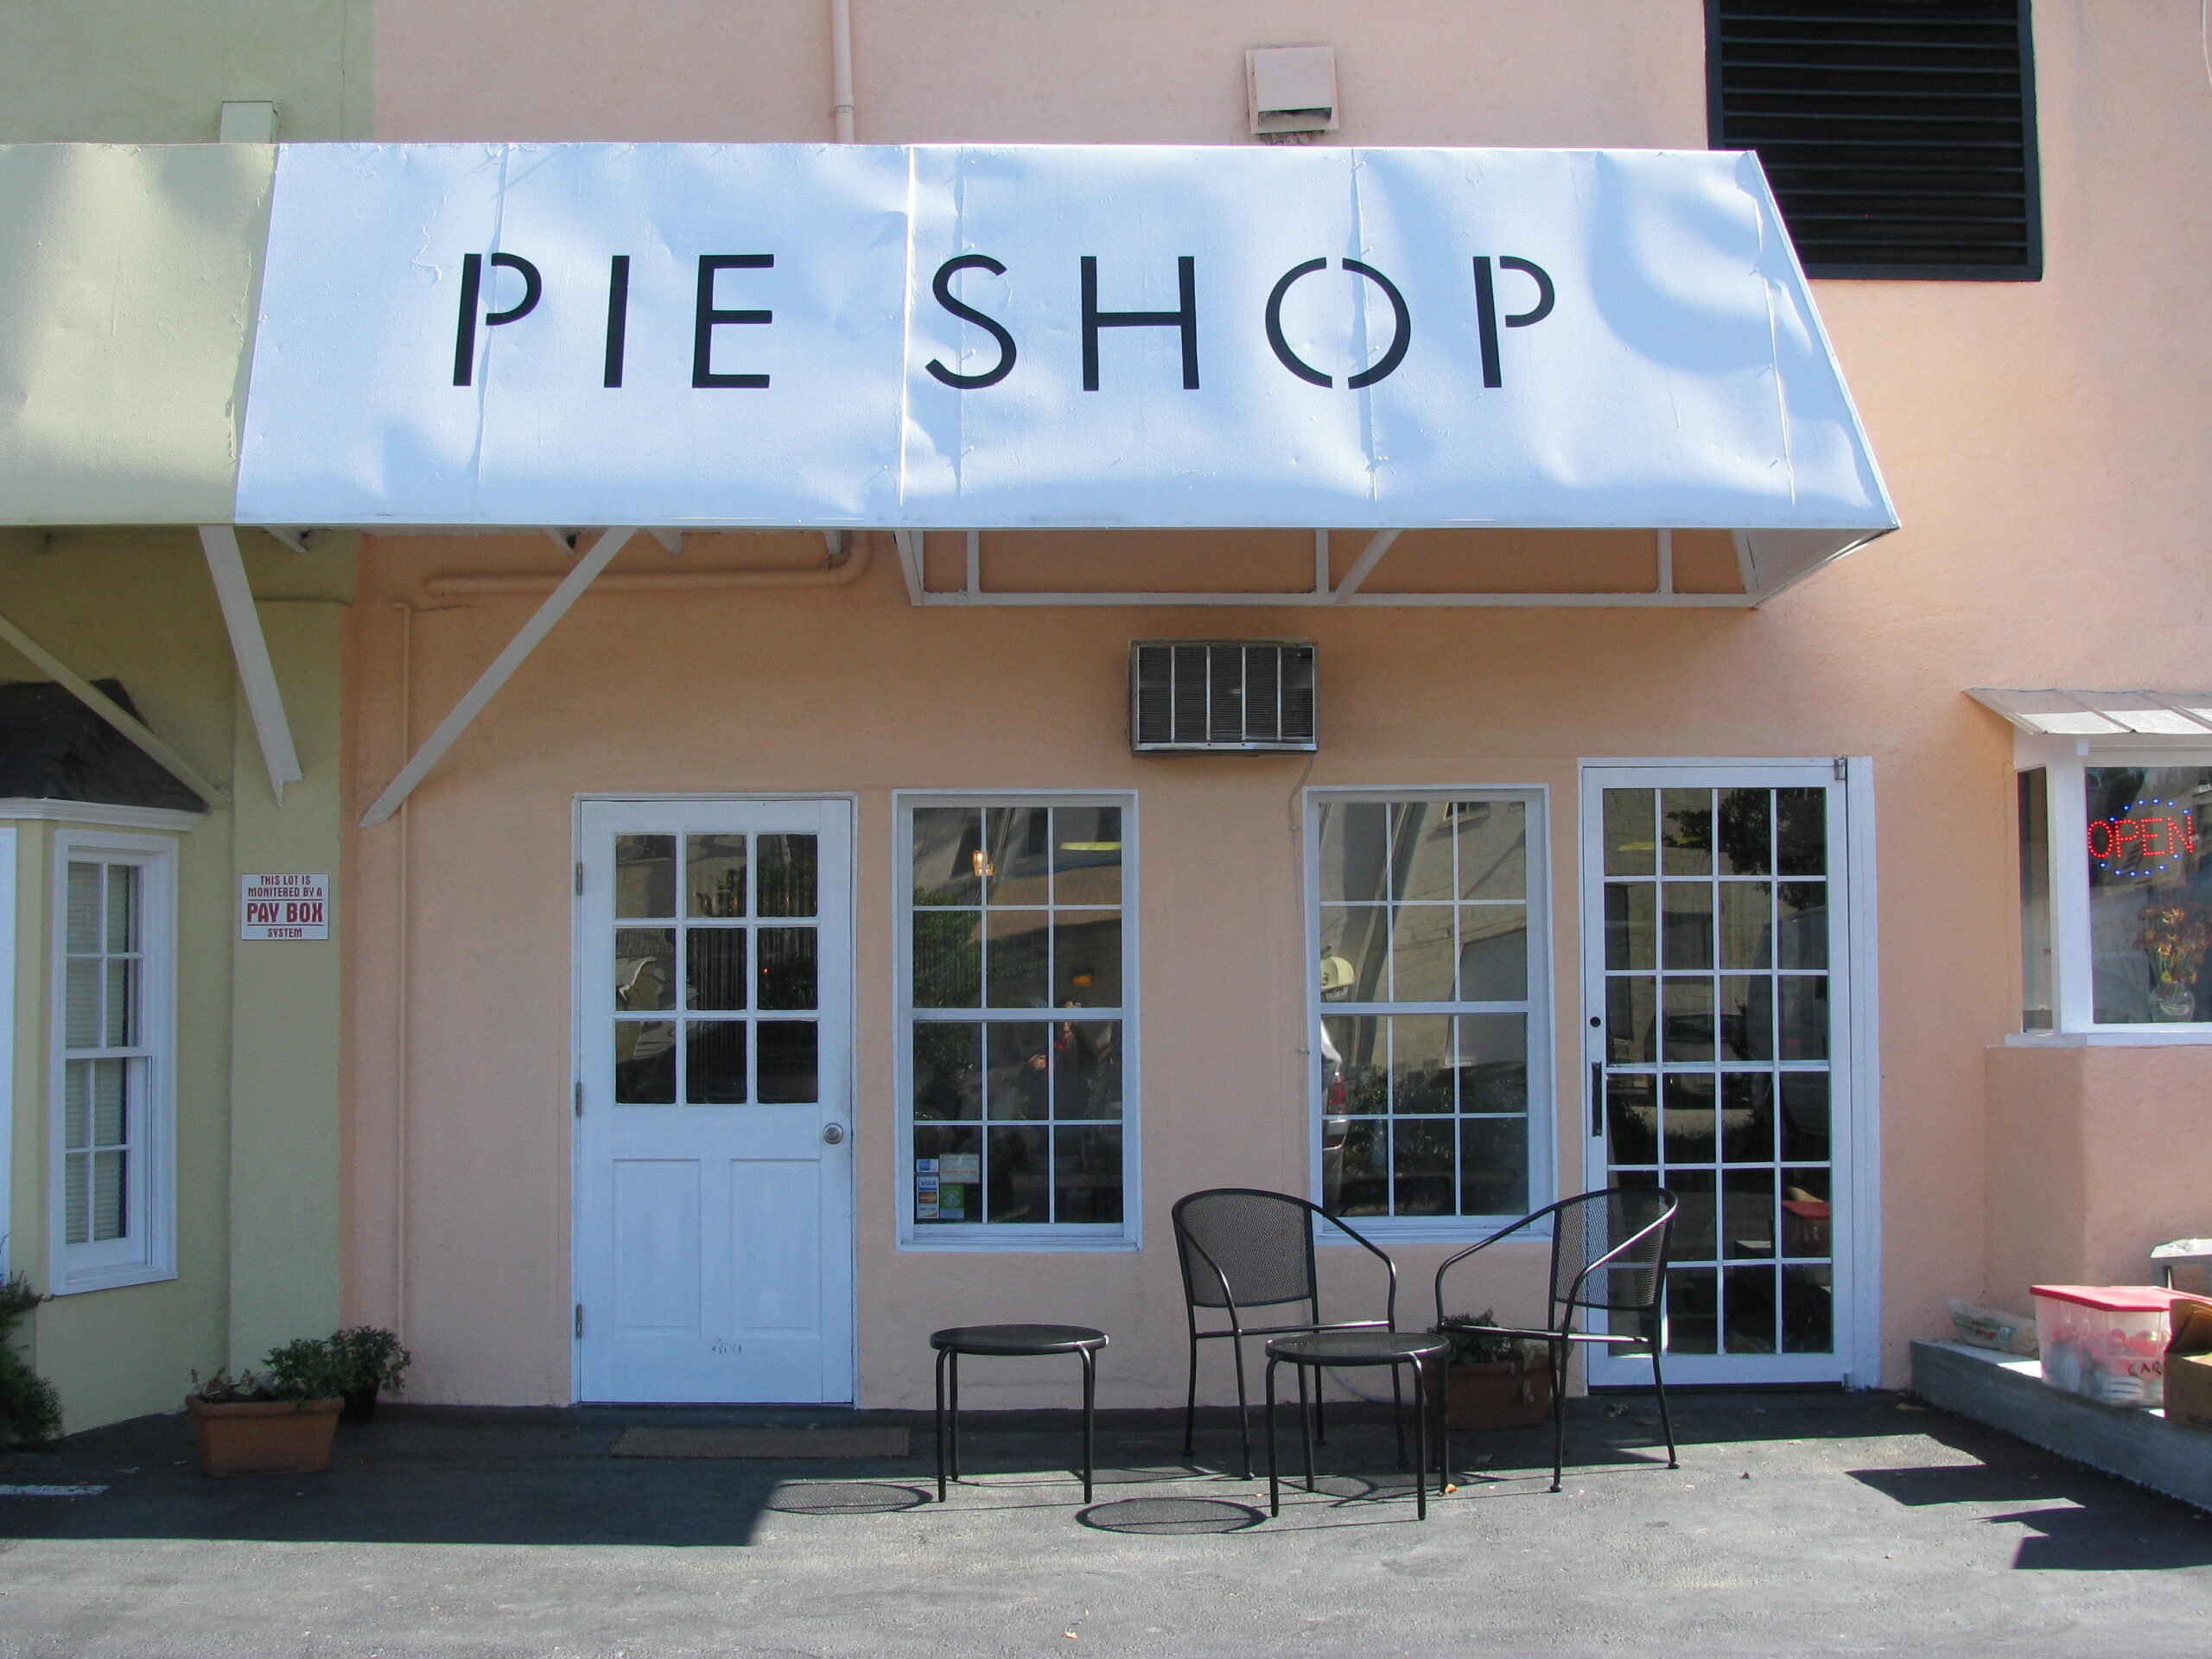 Pop Up Pie Shop